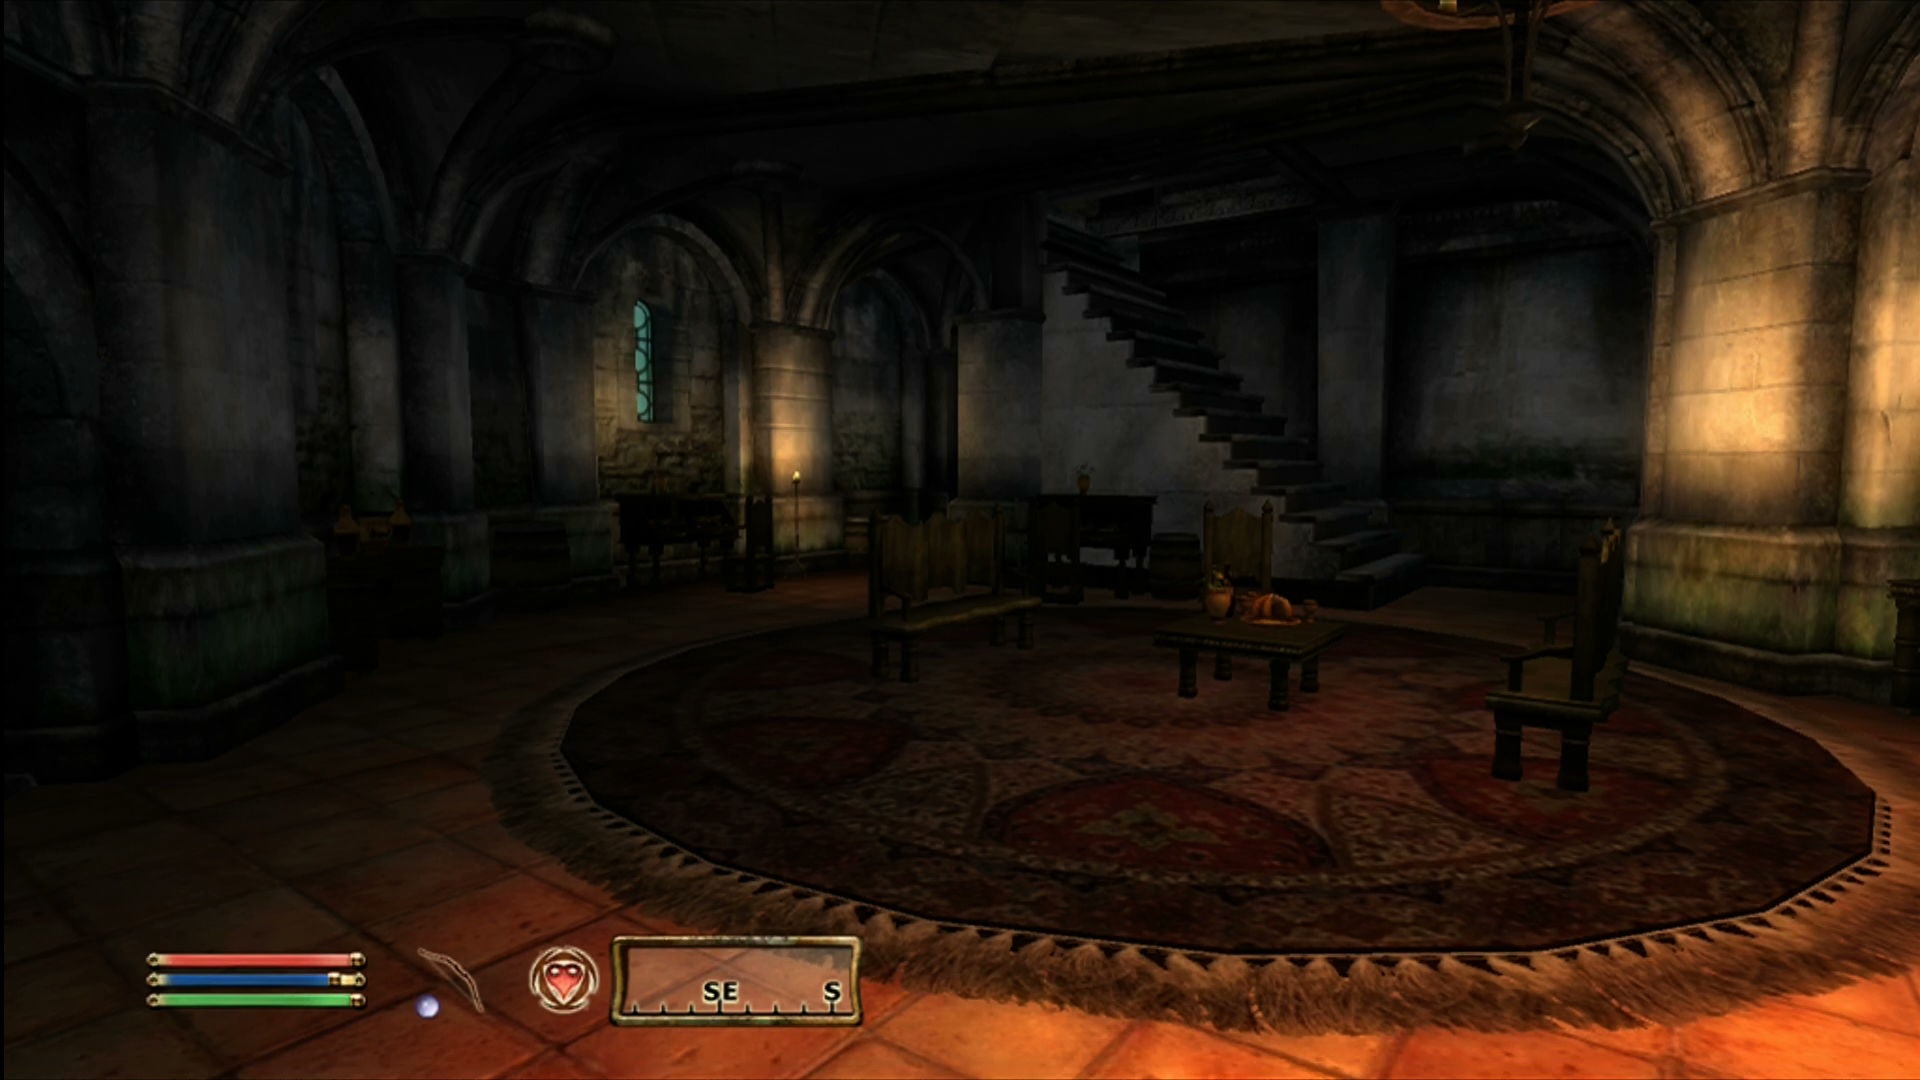 The Elder Scrolls IV: Oblivion (Platinum Hits) - Xbox 360 Game